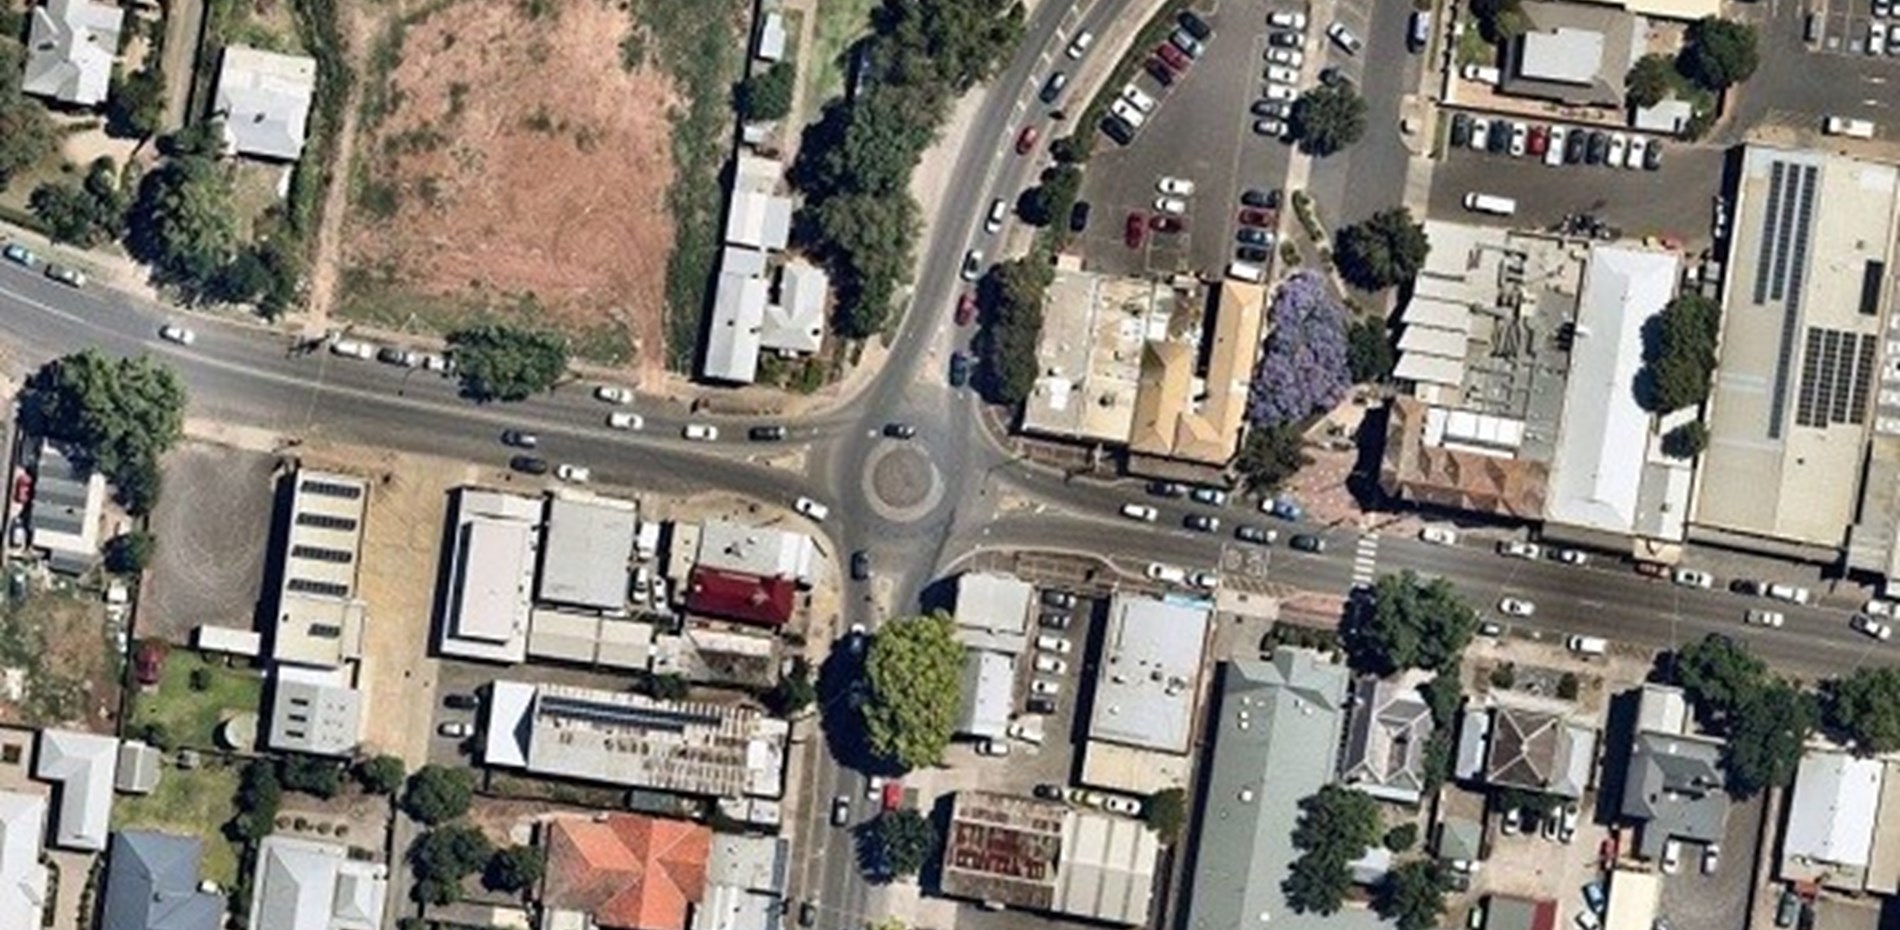 Main Street / Grant Street / Gisborne Road (Bacchus Marsh) intersection upgrade Main Image